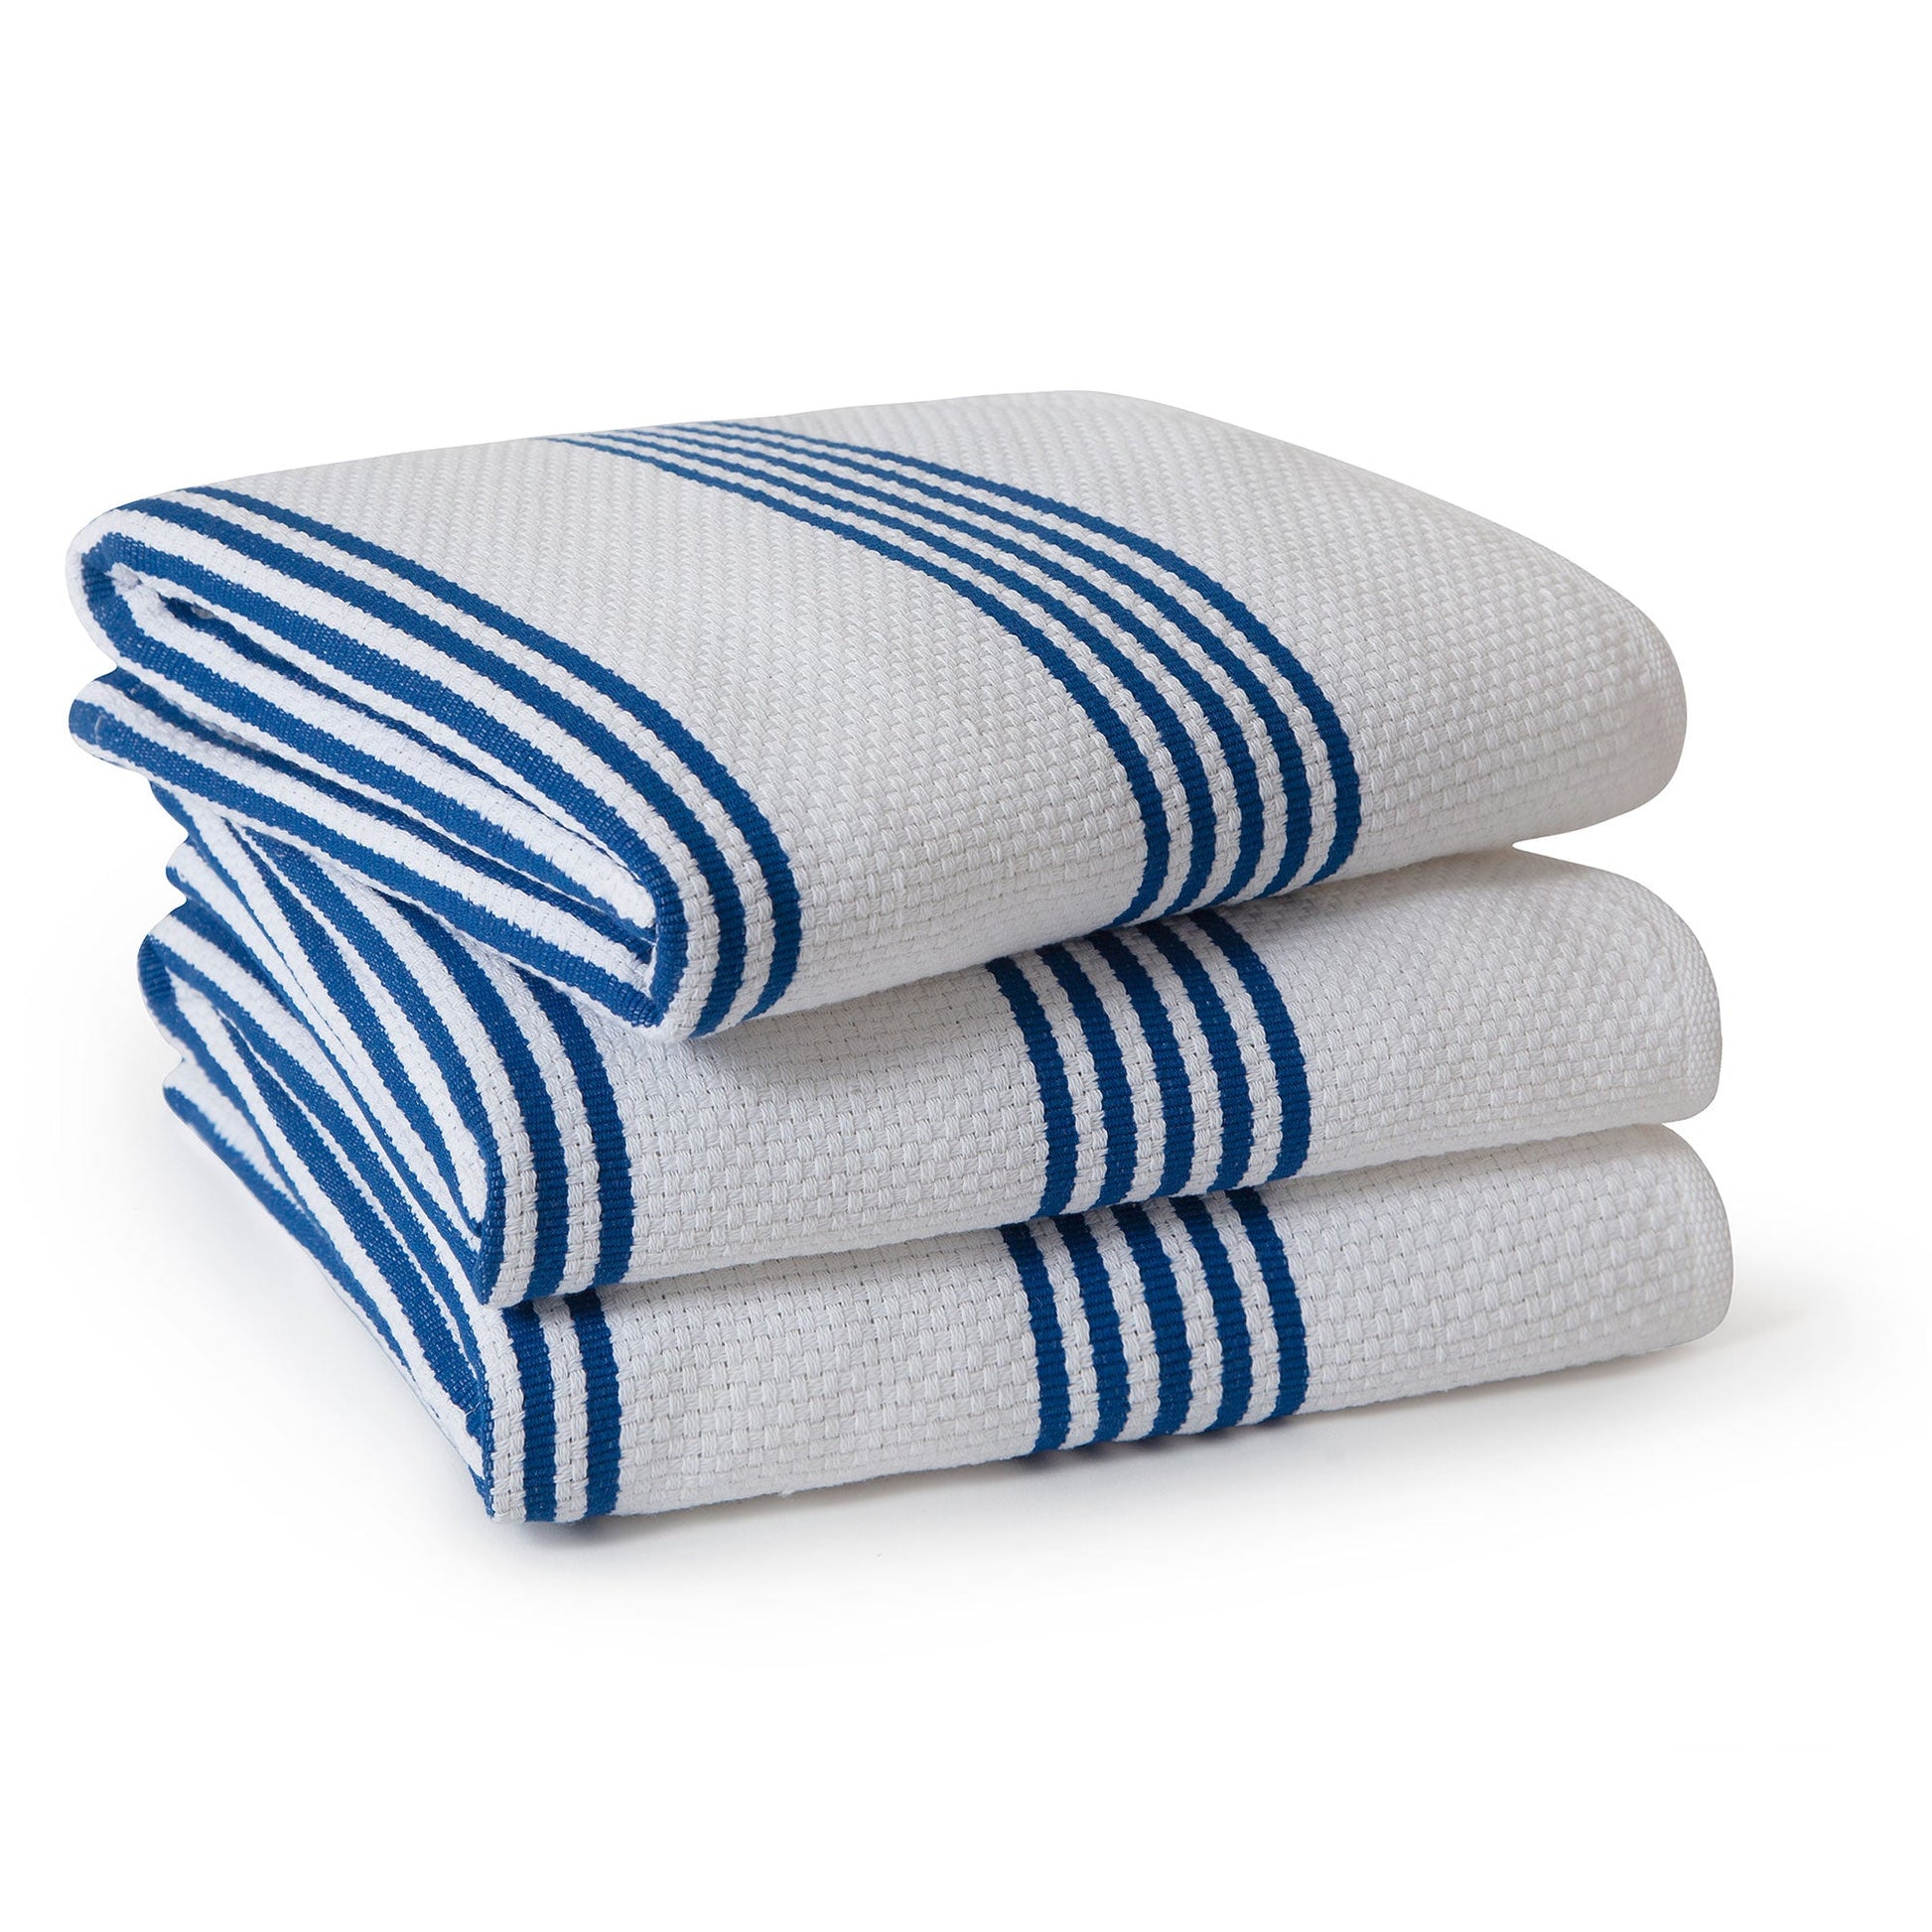 Blue (kitchen towels)